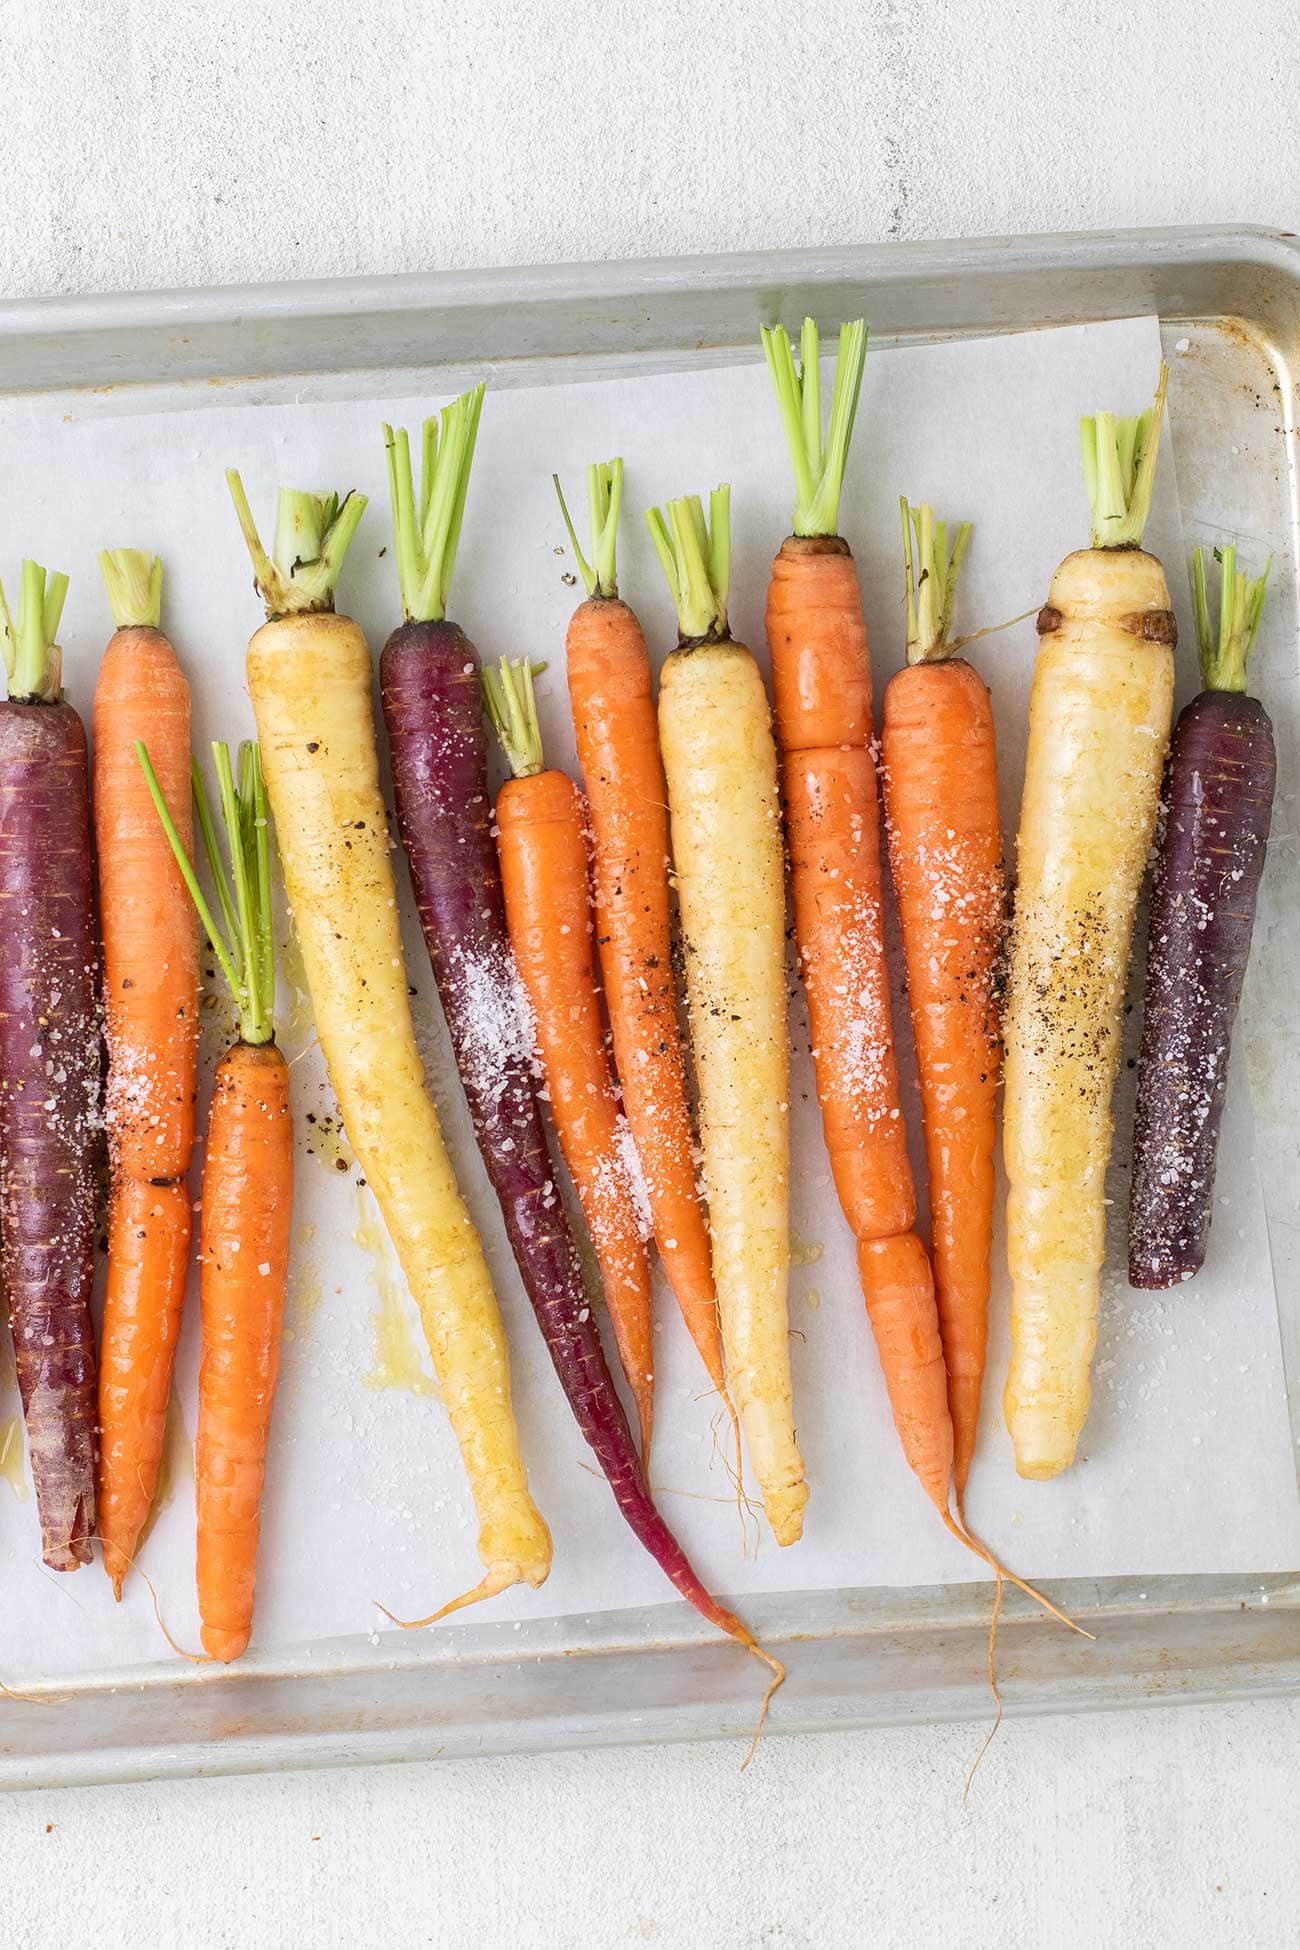 Rainbow carrots sprinkled with kosher salt and black pepper.